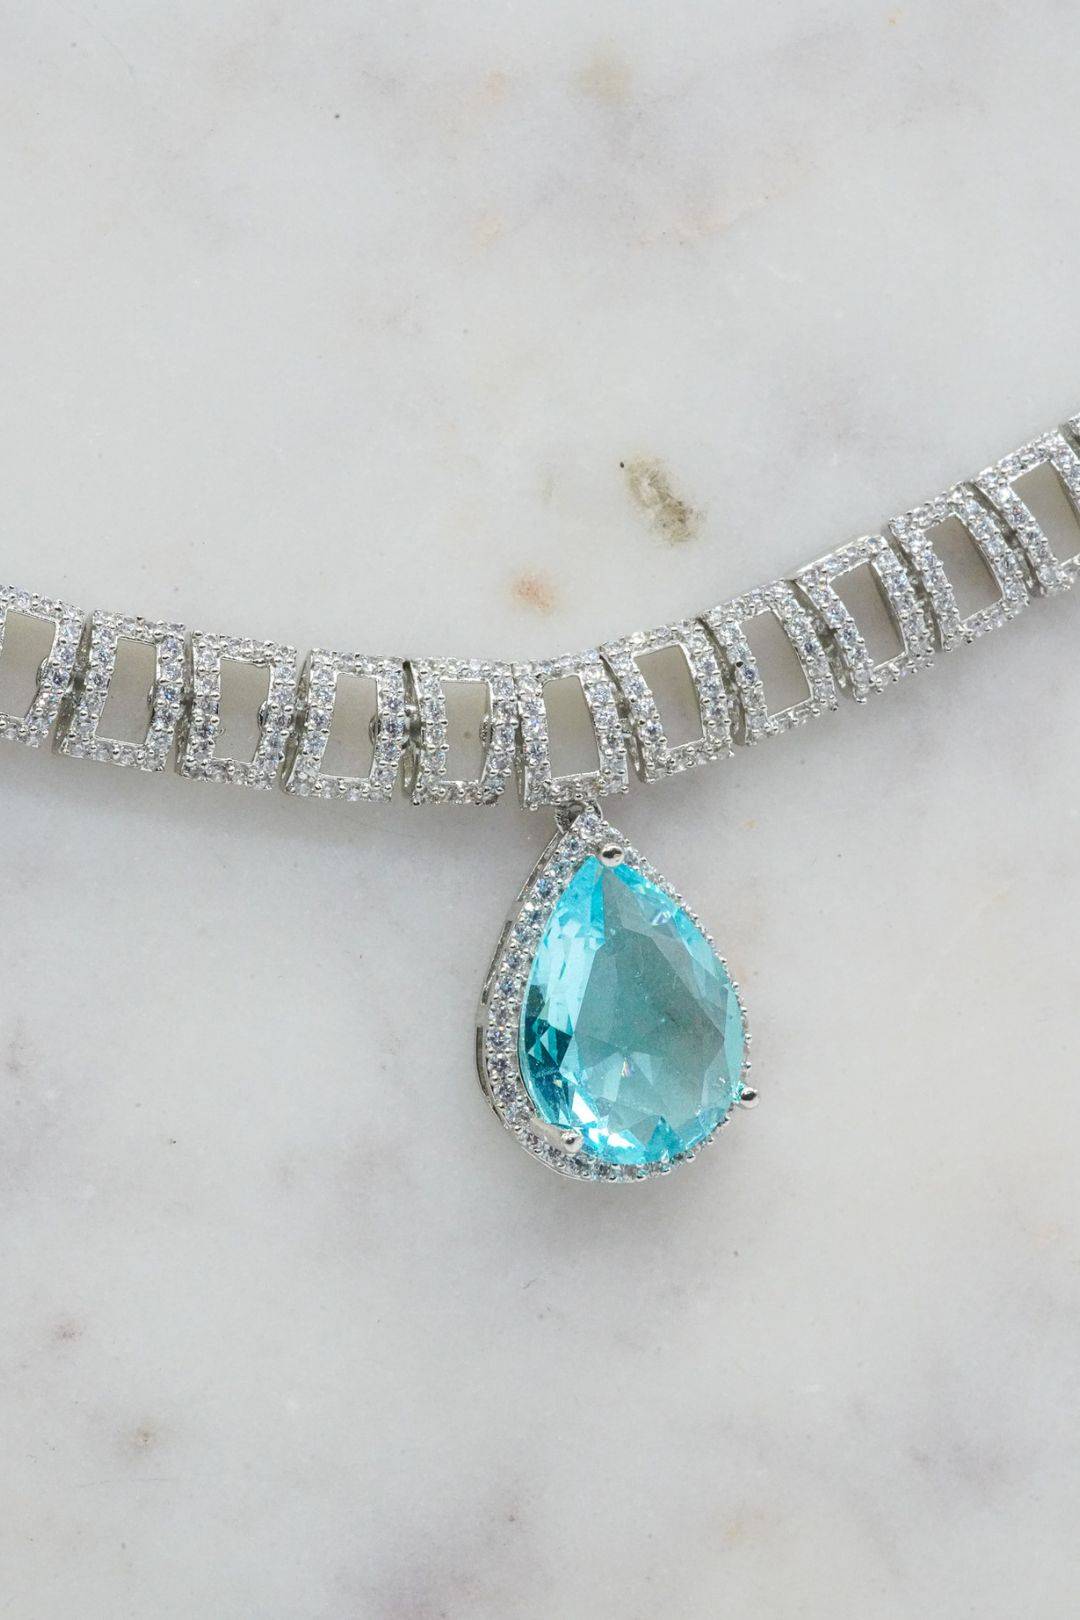 Malina Rhodium-Plated Necklace Set with Aqua Blue Teardrop Center Stone - Indian jewelry